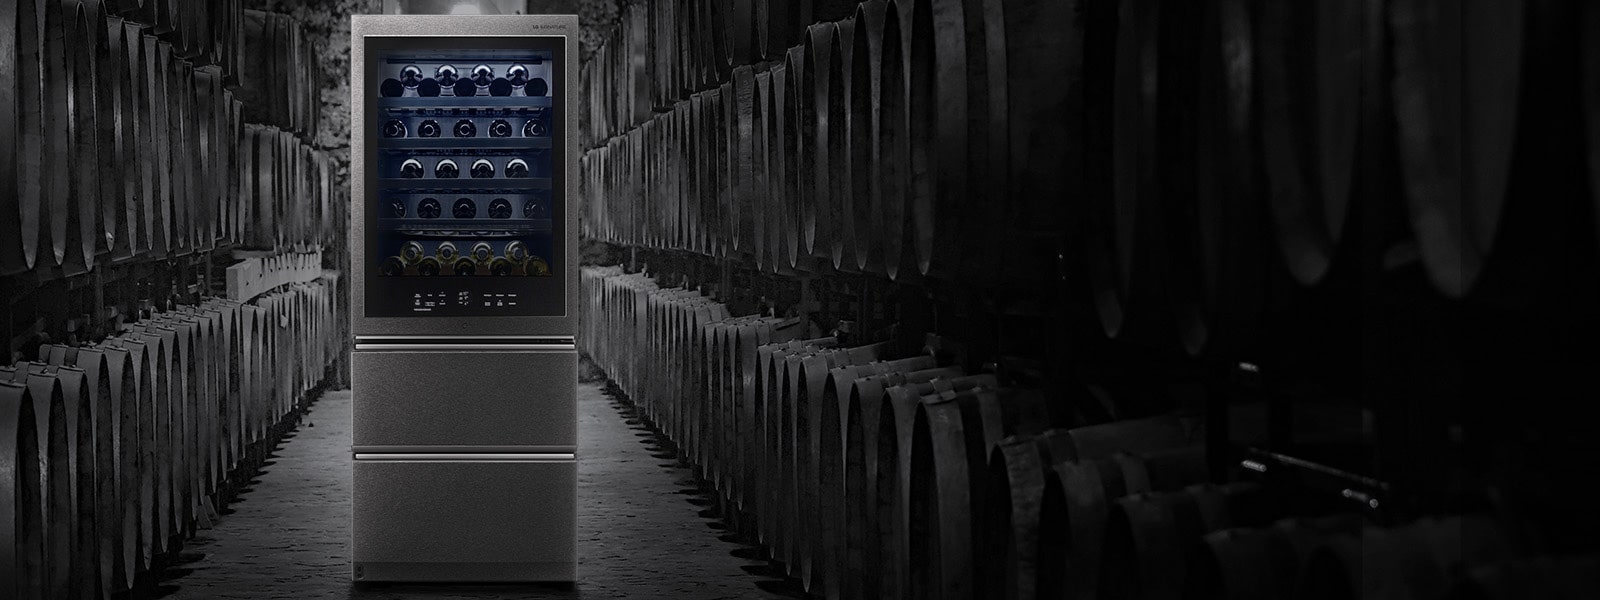 LG URETC1408N refrigerator in a dark wine cellar